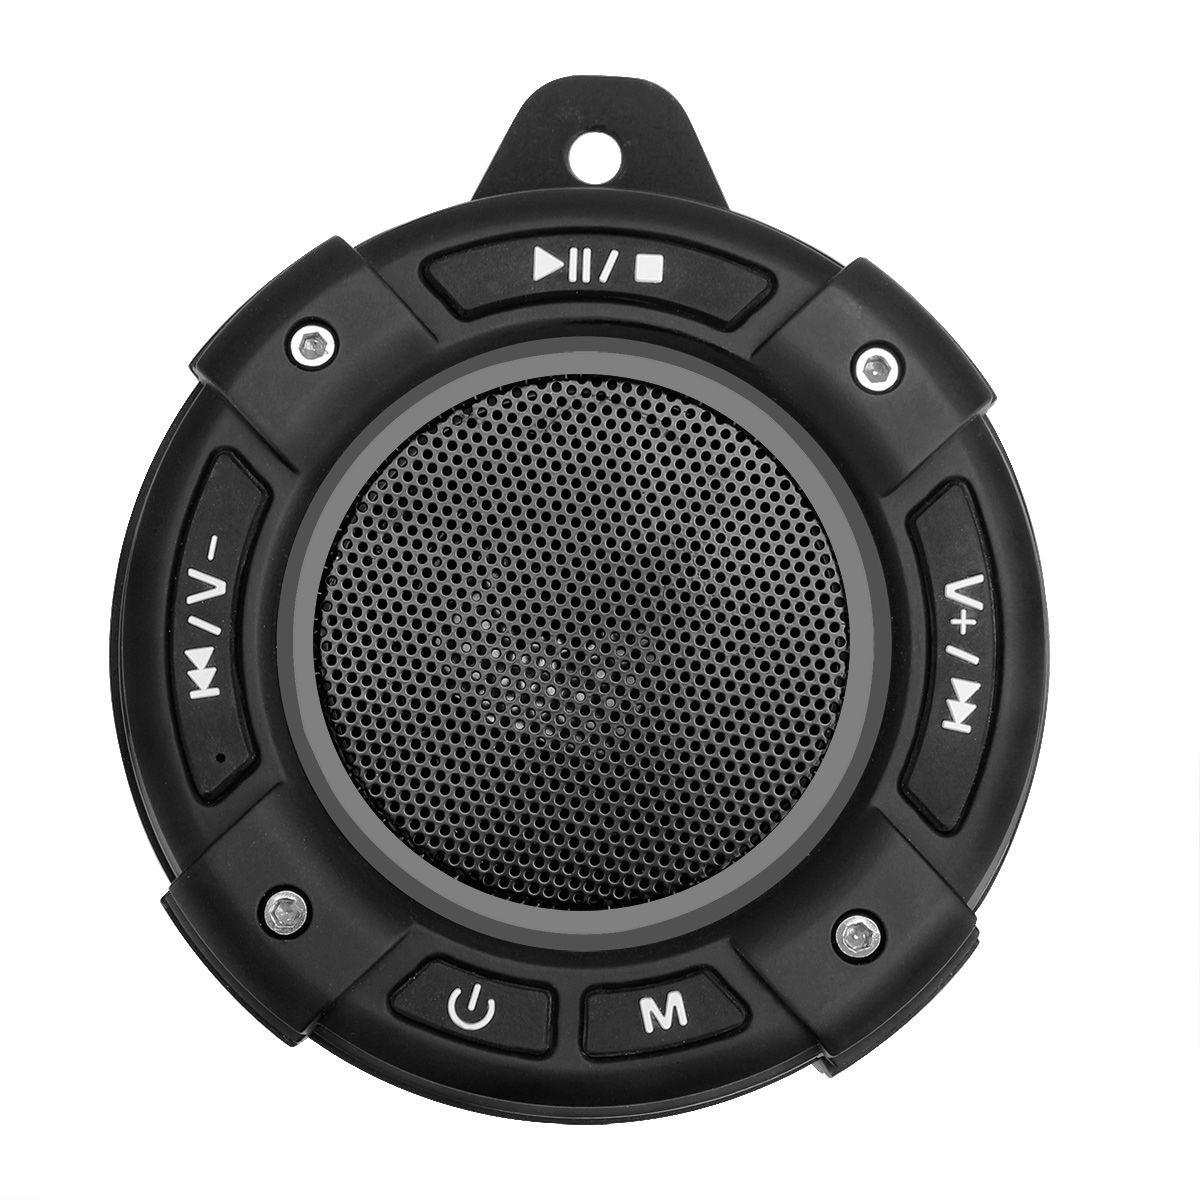 Retekess-TR622-87-108MHz-FM-Radio-bluetooth-IP67-Waterproof-Speaker-LED-Light-Music-Player-for-Danci-1711261